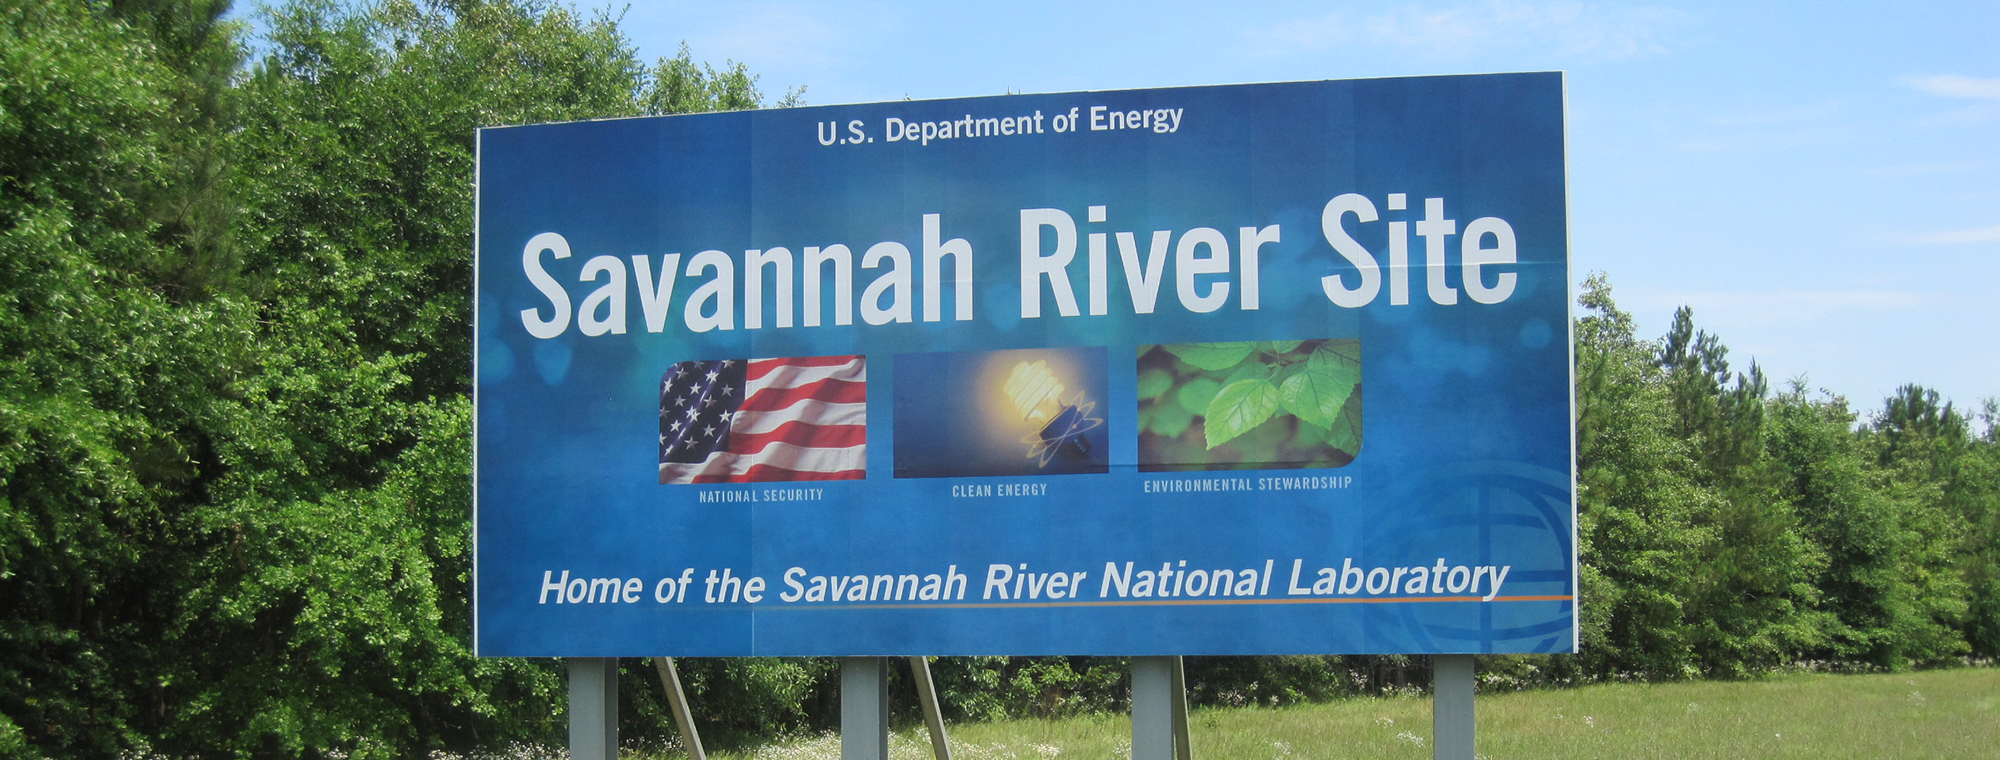 Savannah River Site sign